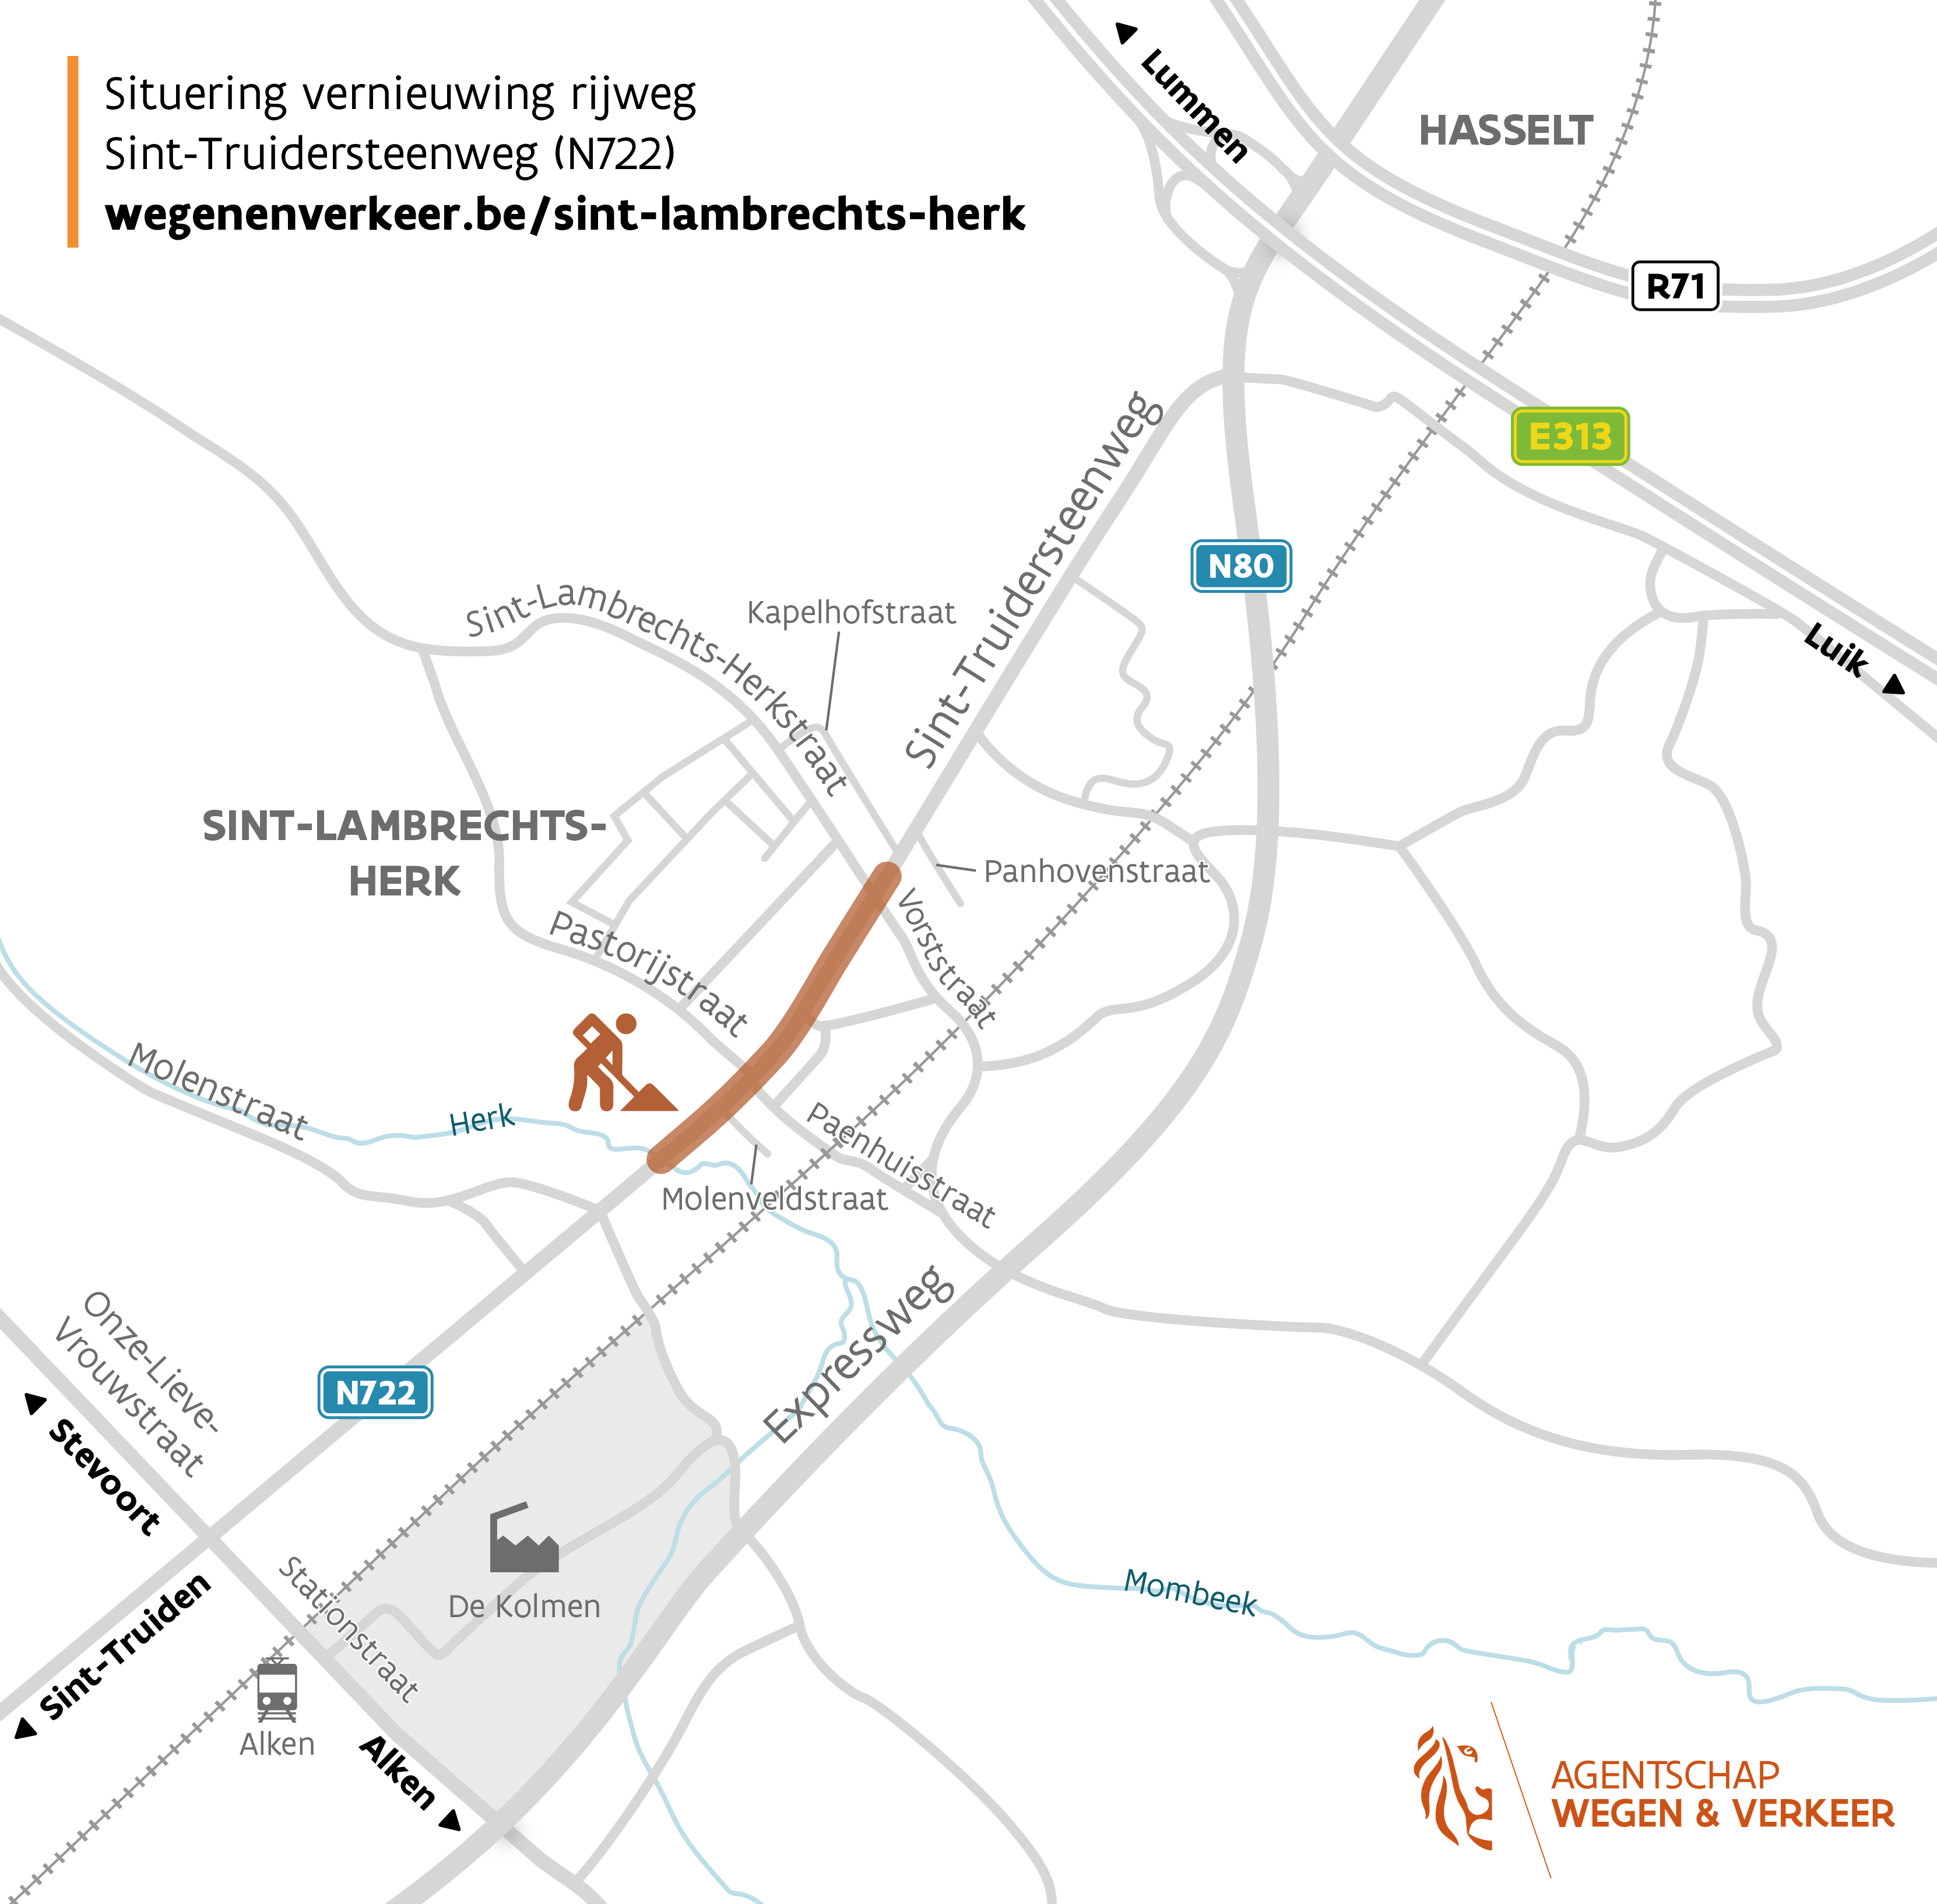 Vernieuwing wegdek Sint-Truidersteenweg Hasselt in 2021